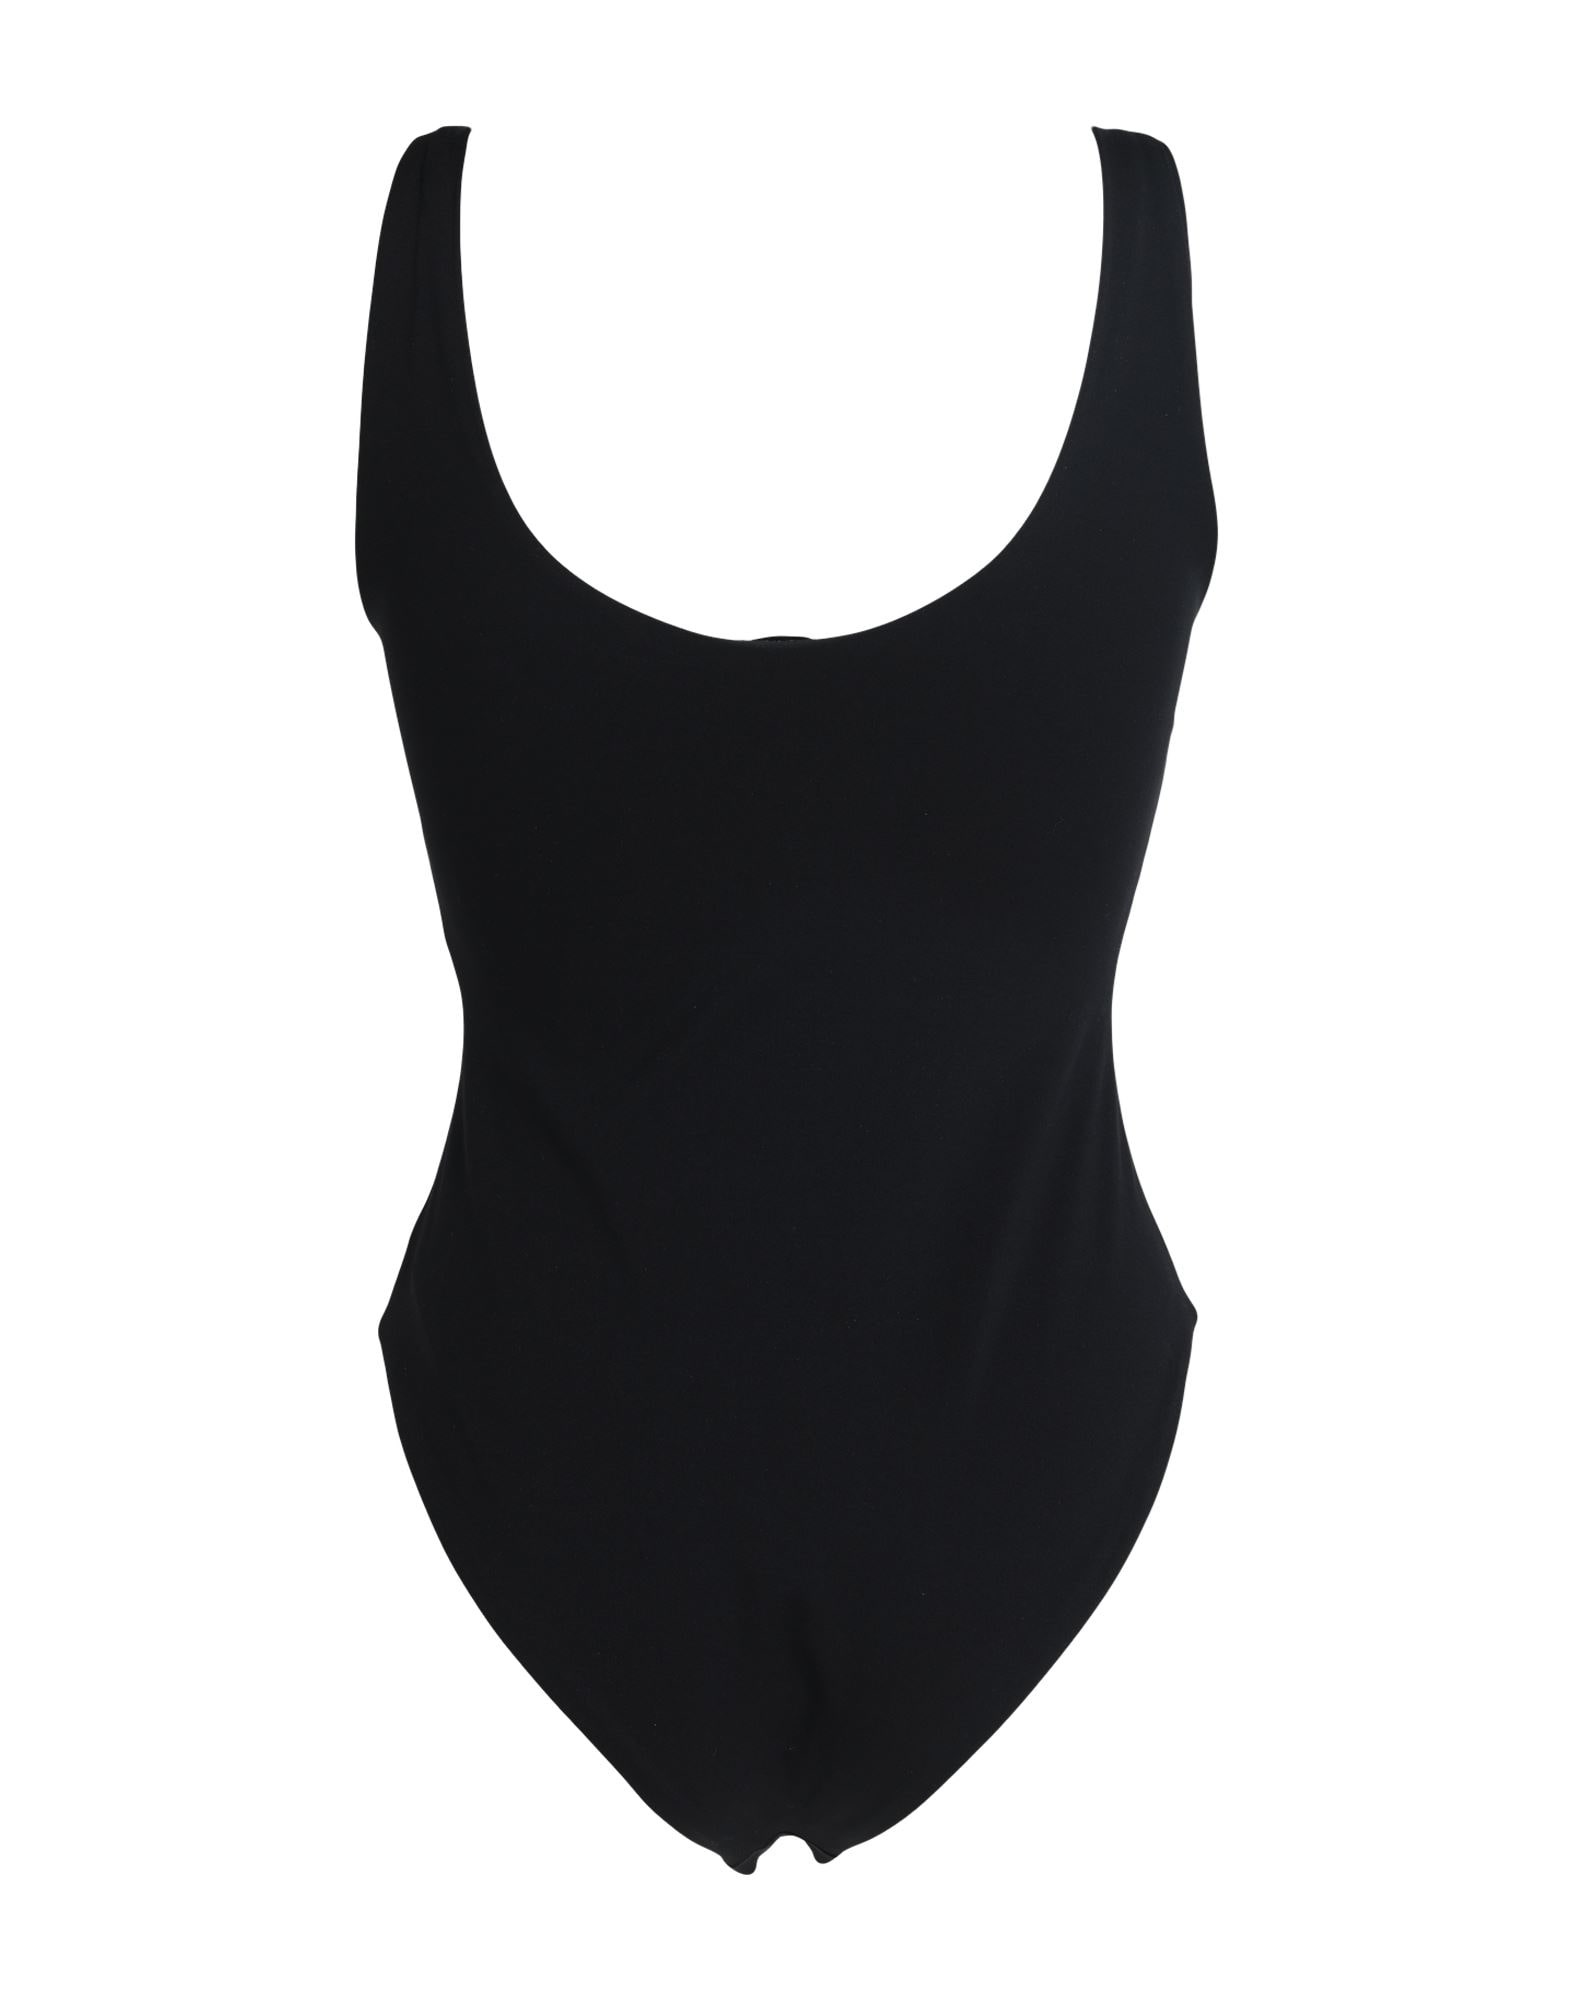 Black Women's One-piece Swimsuits - 2